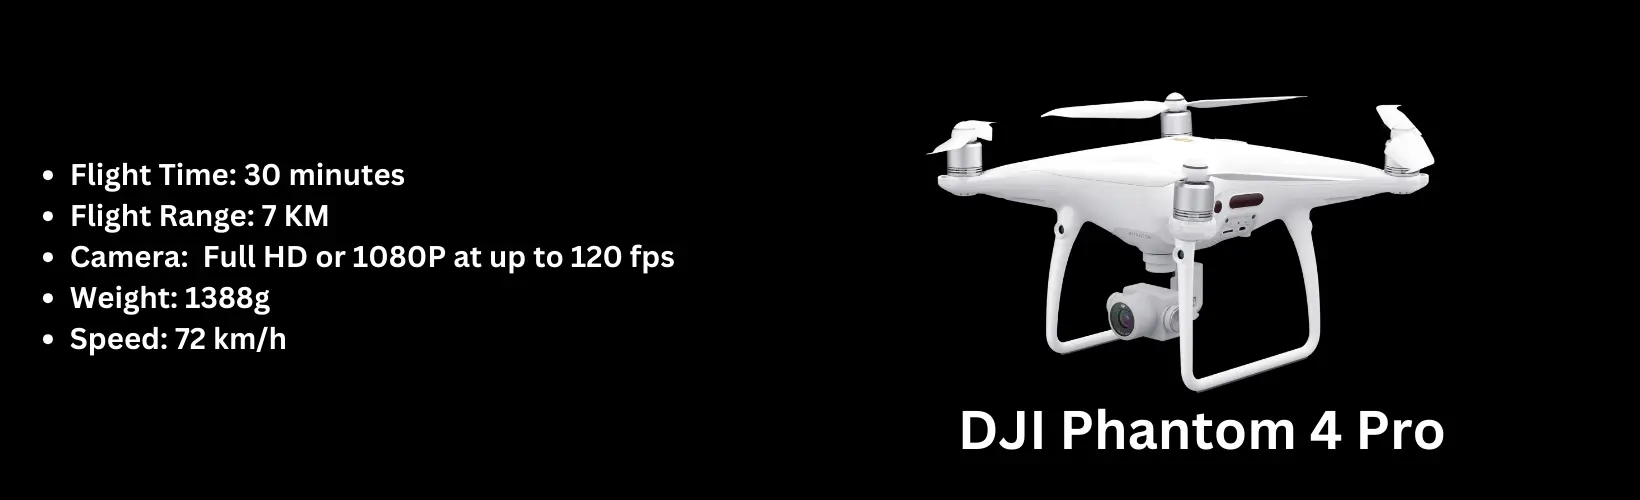 DJI-Phantom-4-pro-specifications